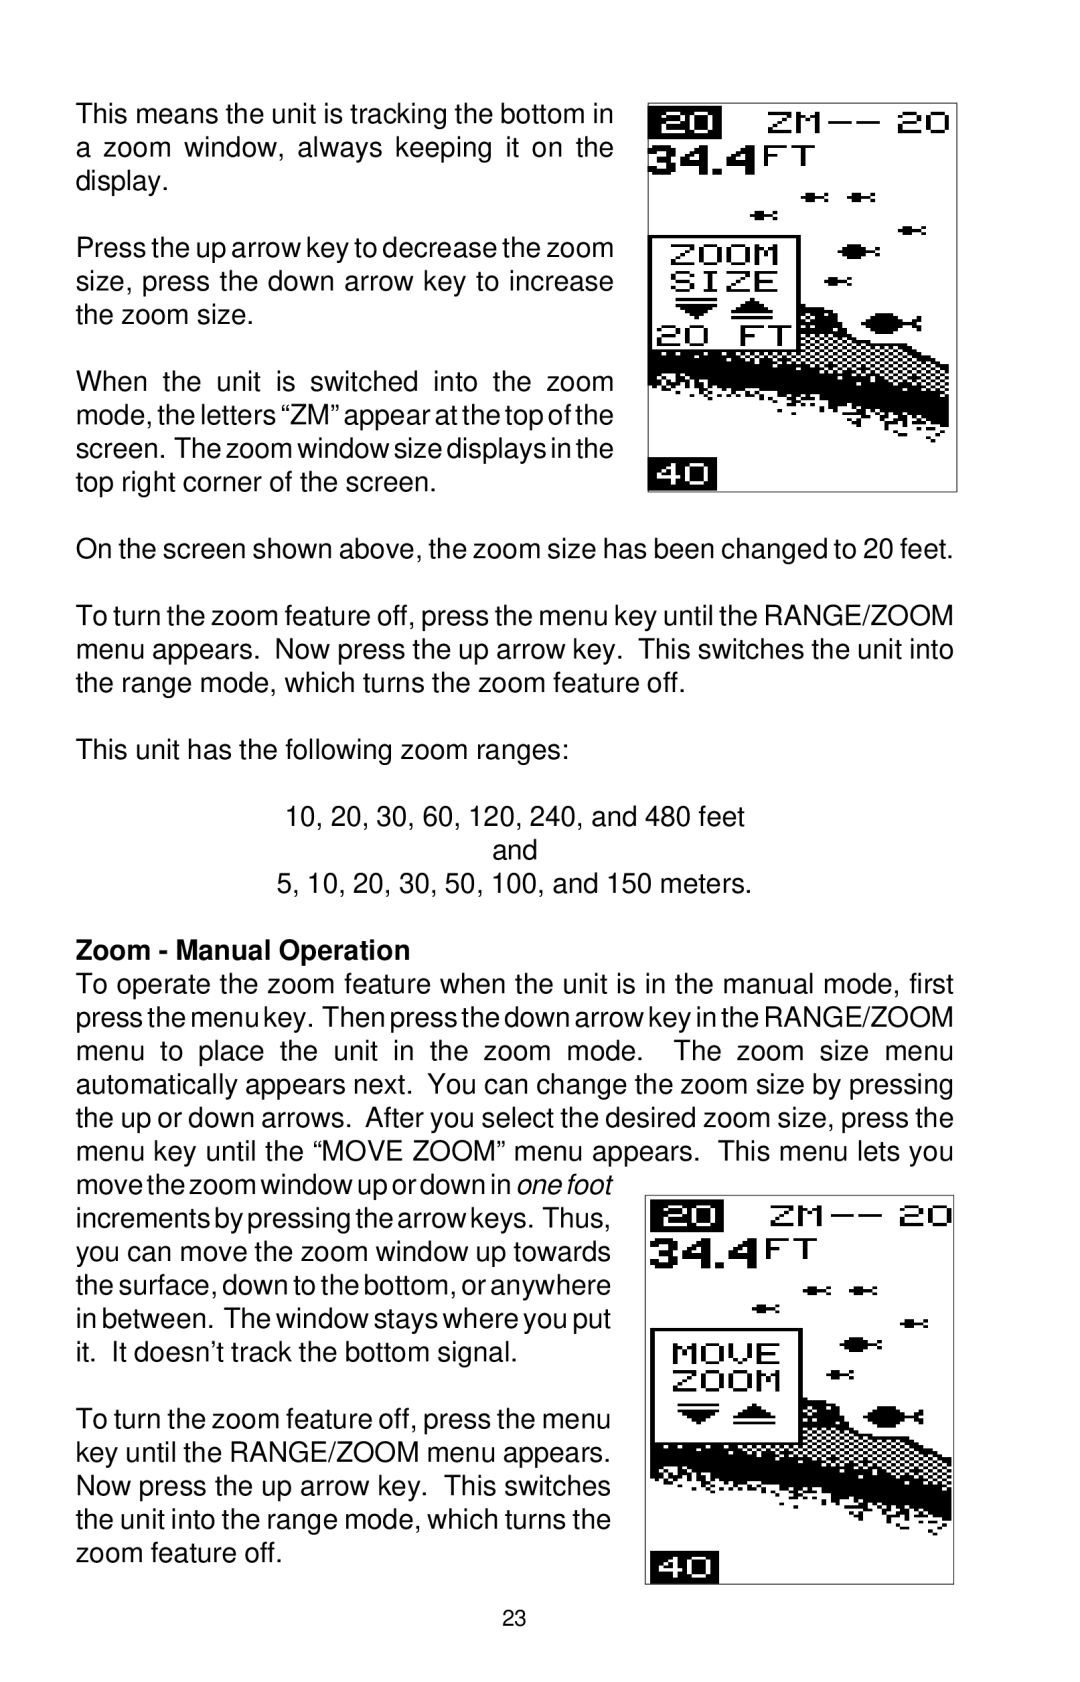 Eagle Electronics 128 manual Zoom Manual Operation 